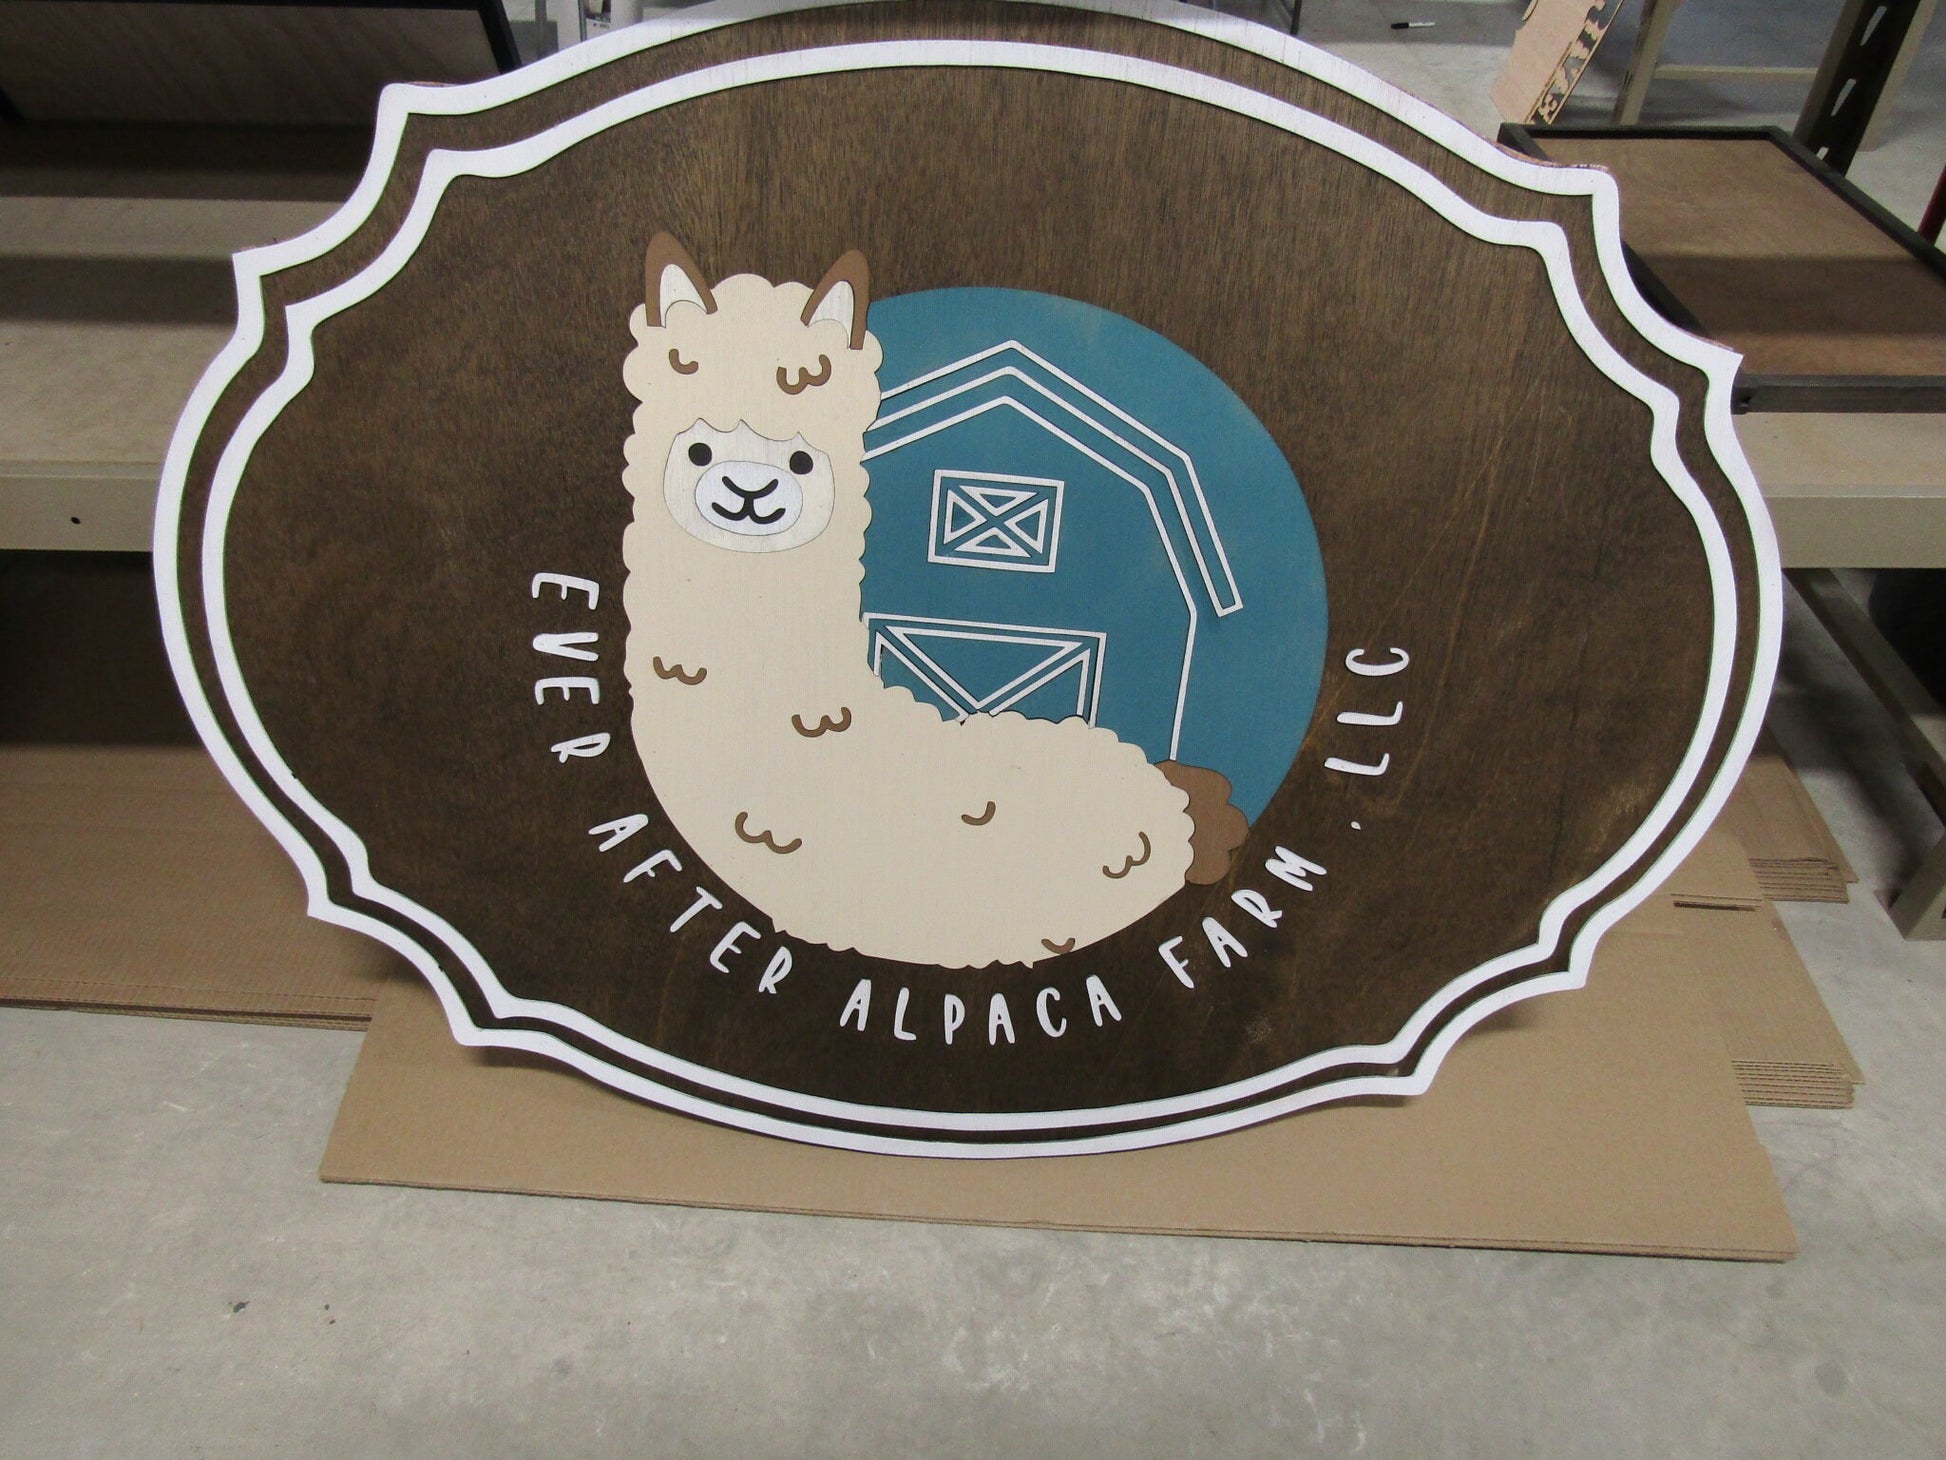 Custom Oval Alpaca Farm Sign Logo Farm Animal Livestock Barn Ever After Handmade Wooden Decor Commerical Signage Cute Fluff 3D Raised